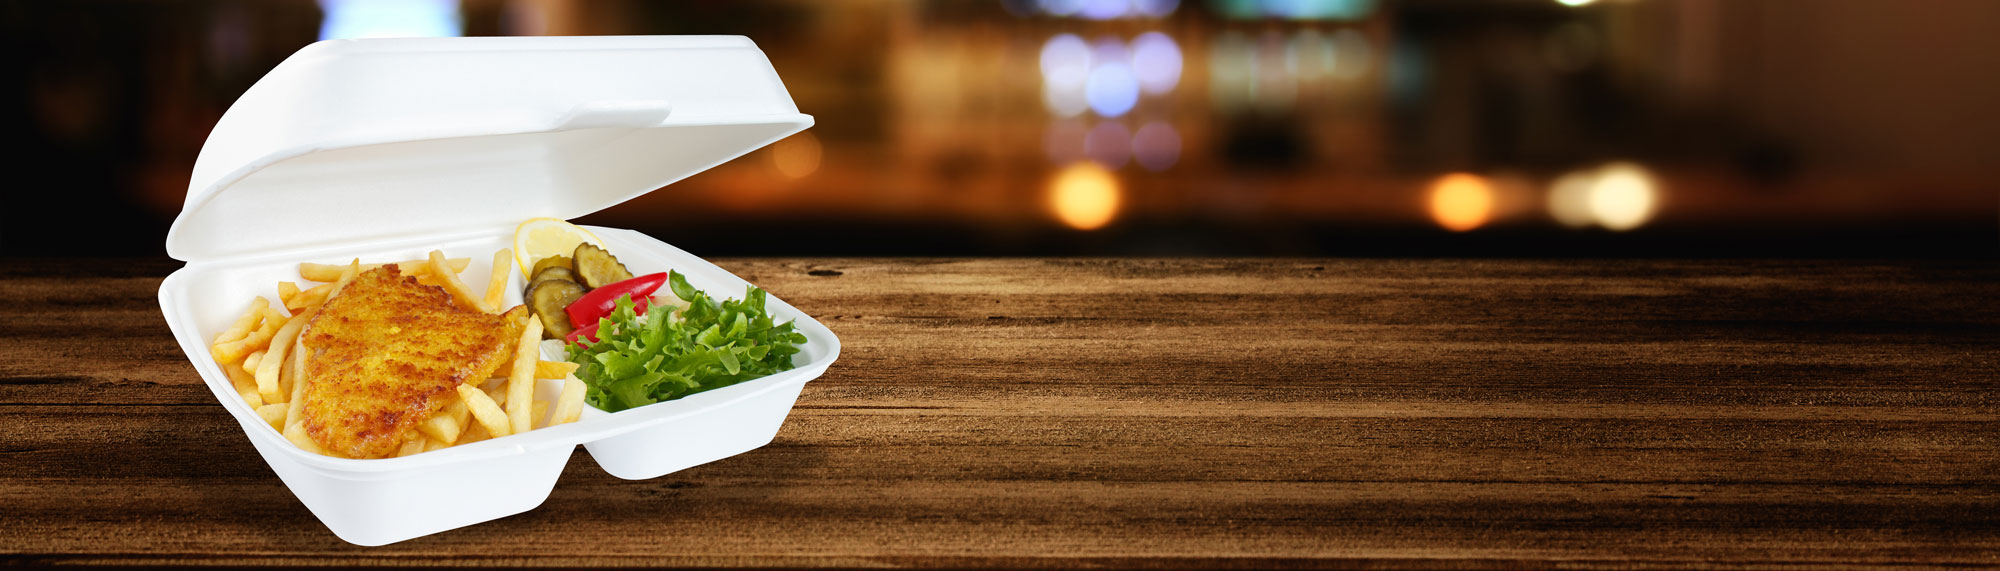 restaurants use foam plates disposable food